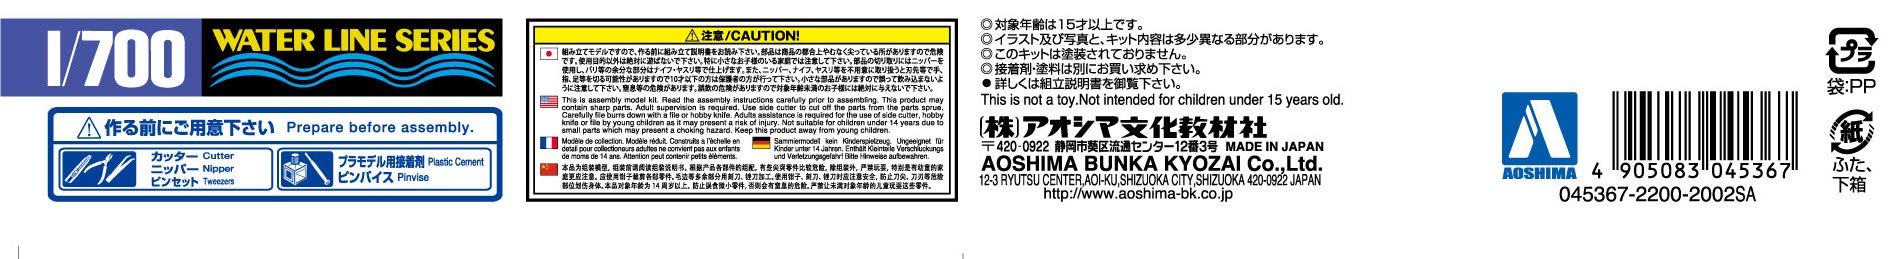 AOSHIMA Waterline 1/700 Ijn Japanischer schwerer Kreuzer Takao Plastikmodell